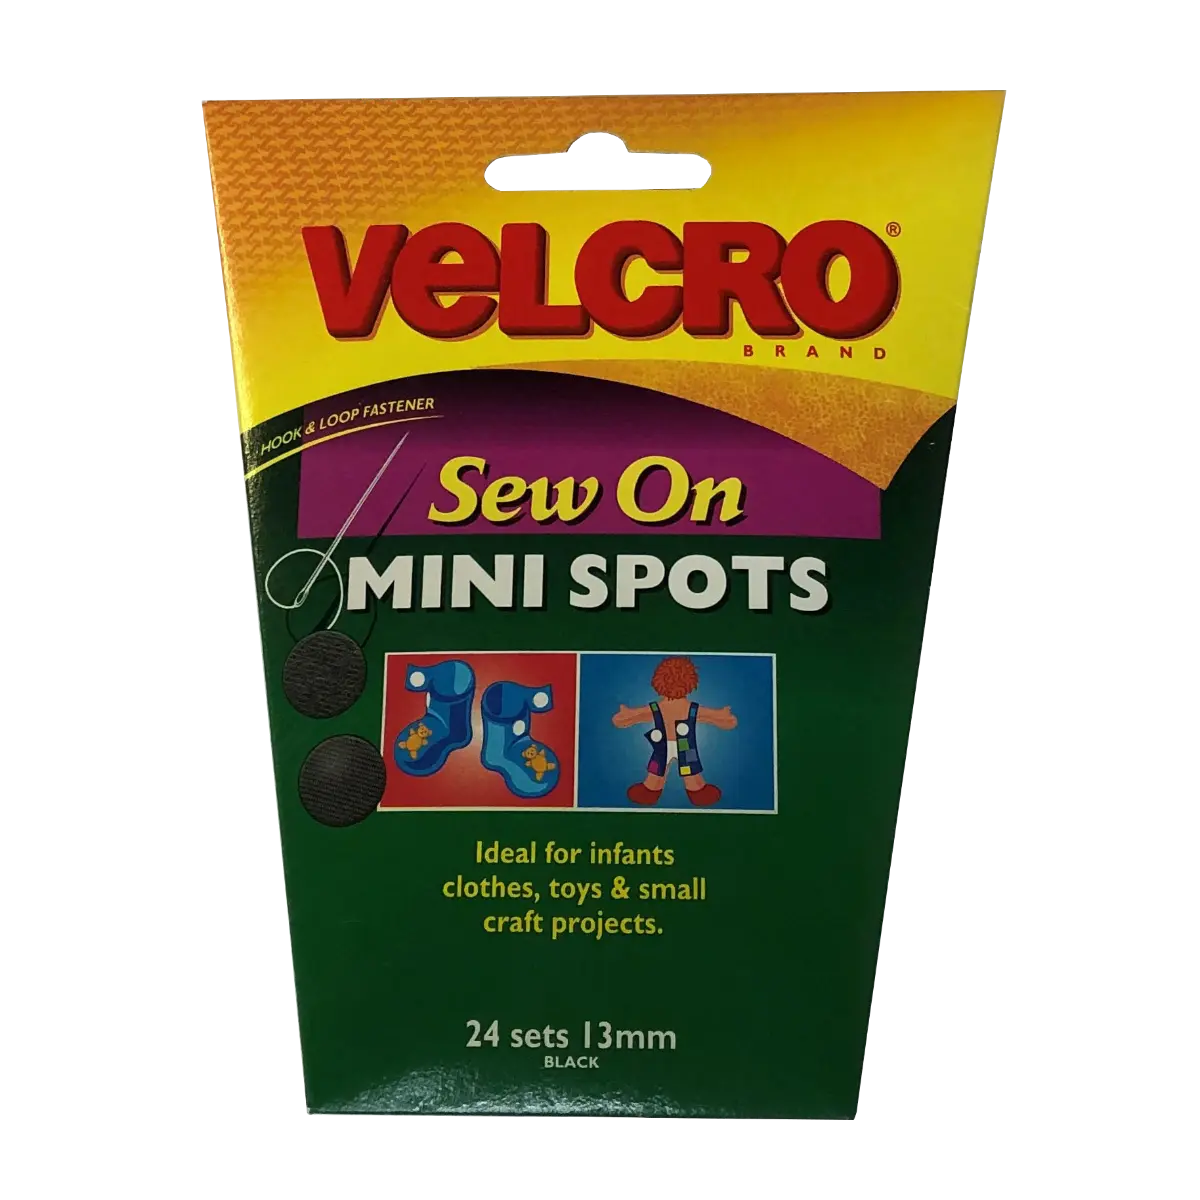 Velcro mini black sew on spots- 24 pack, 13mm spots